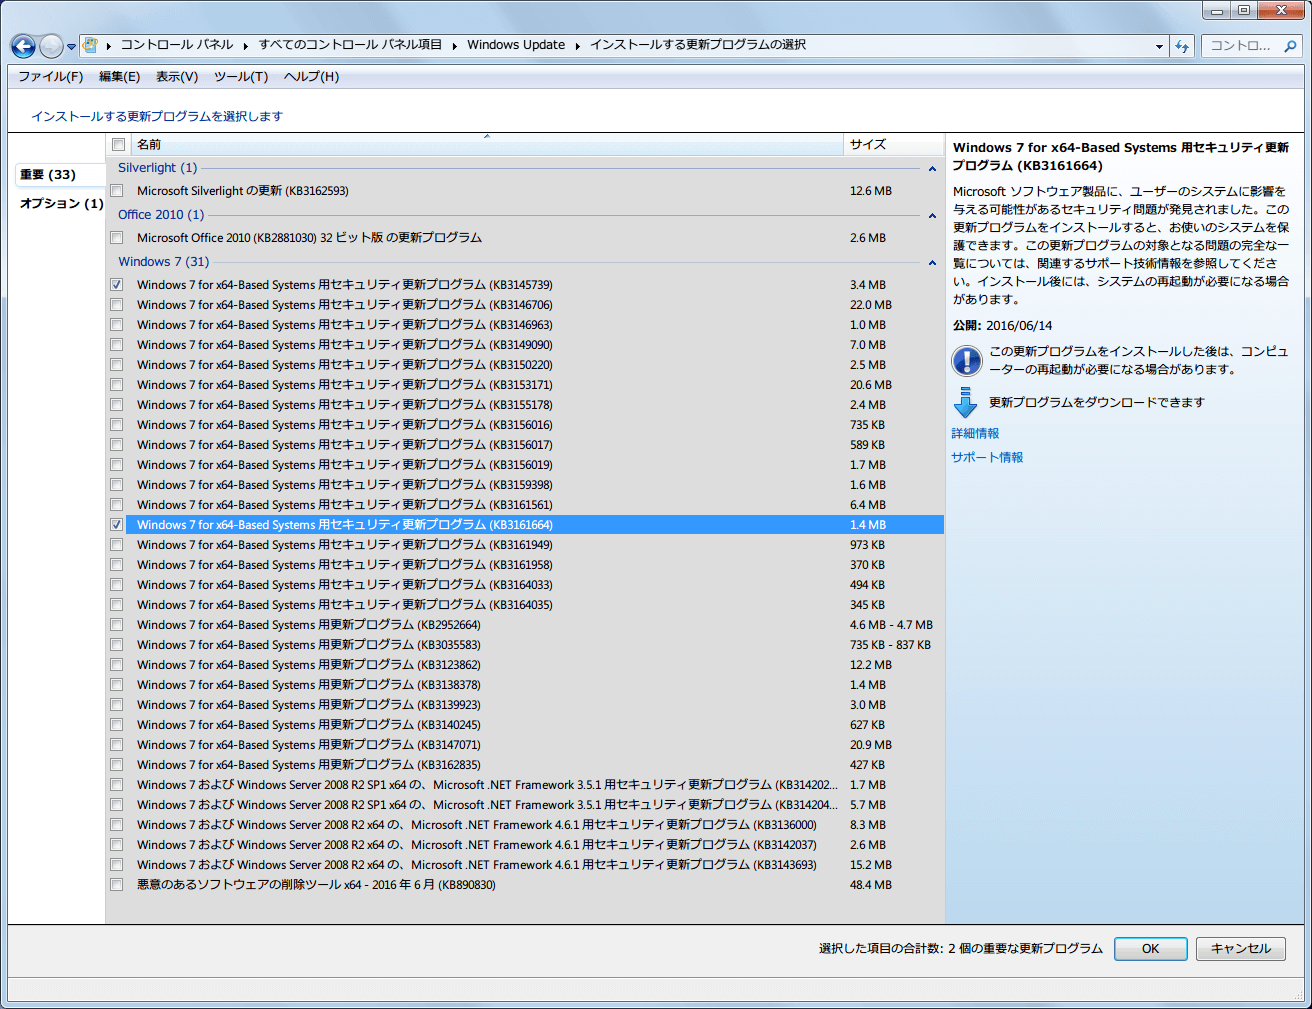 Windows 7 for x64-Based Systems 用セキュリティ更新プログラム KB3161664 公開：2016/06/14 Windows Update チェック時間短縮のため先にインストール